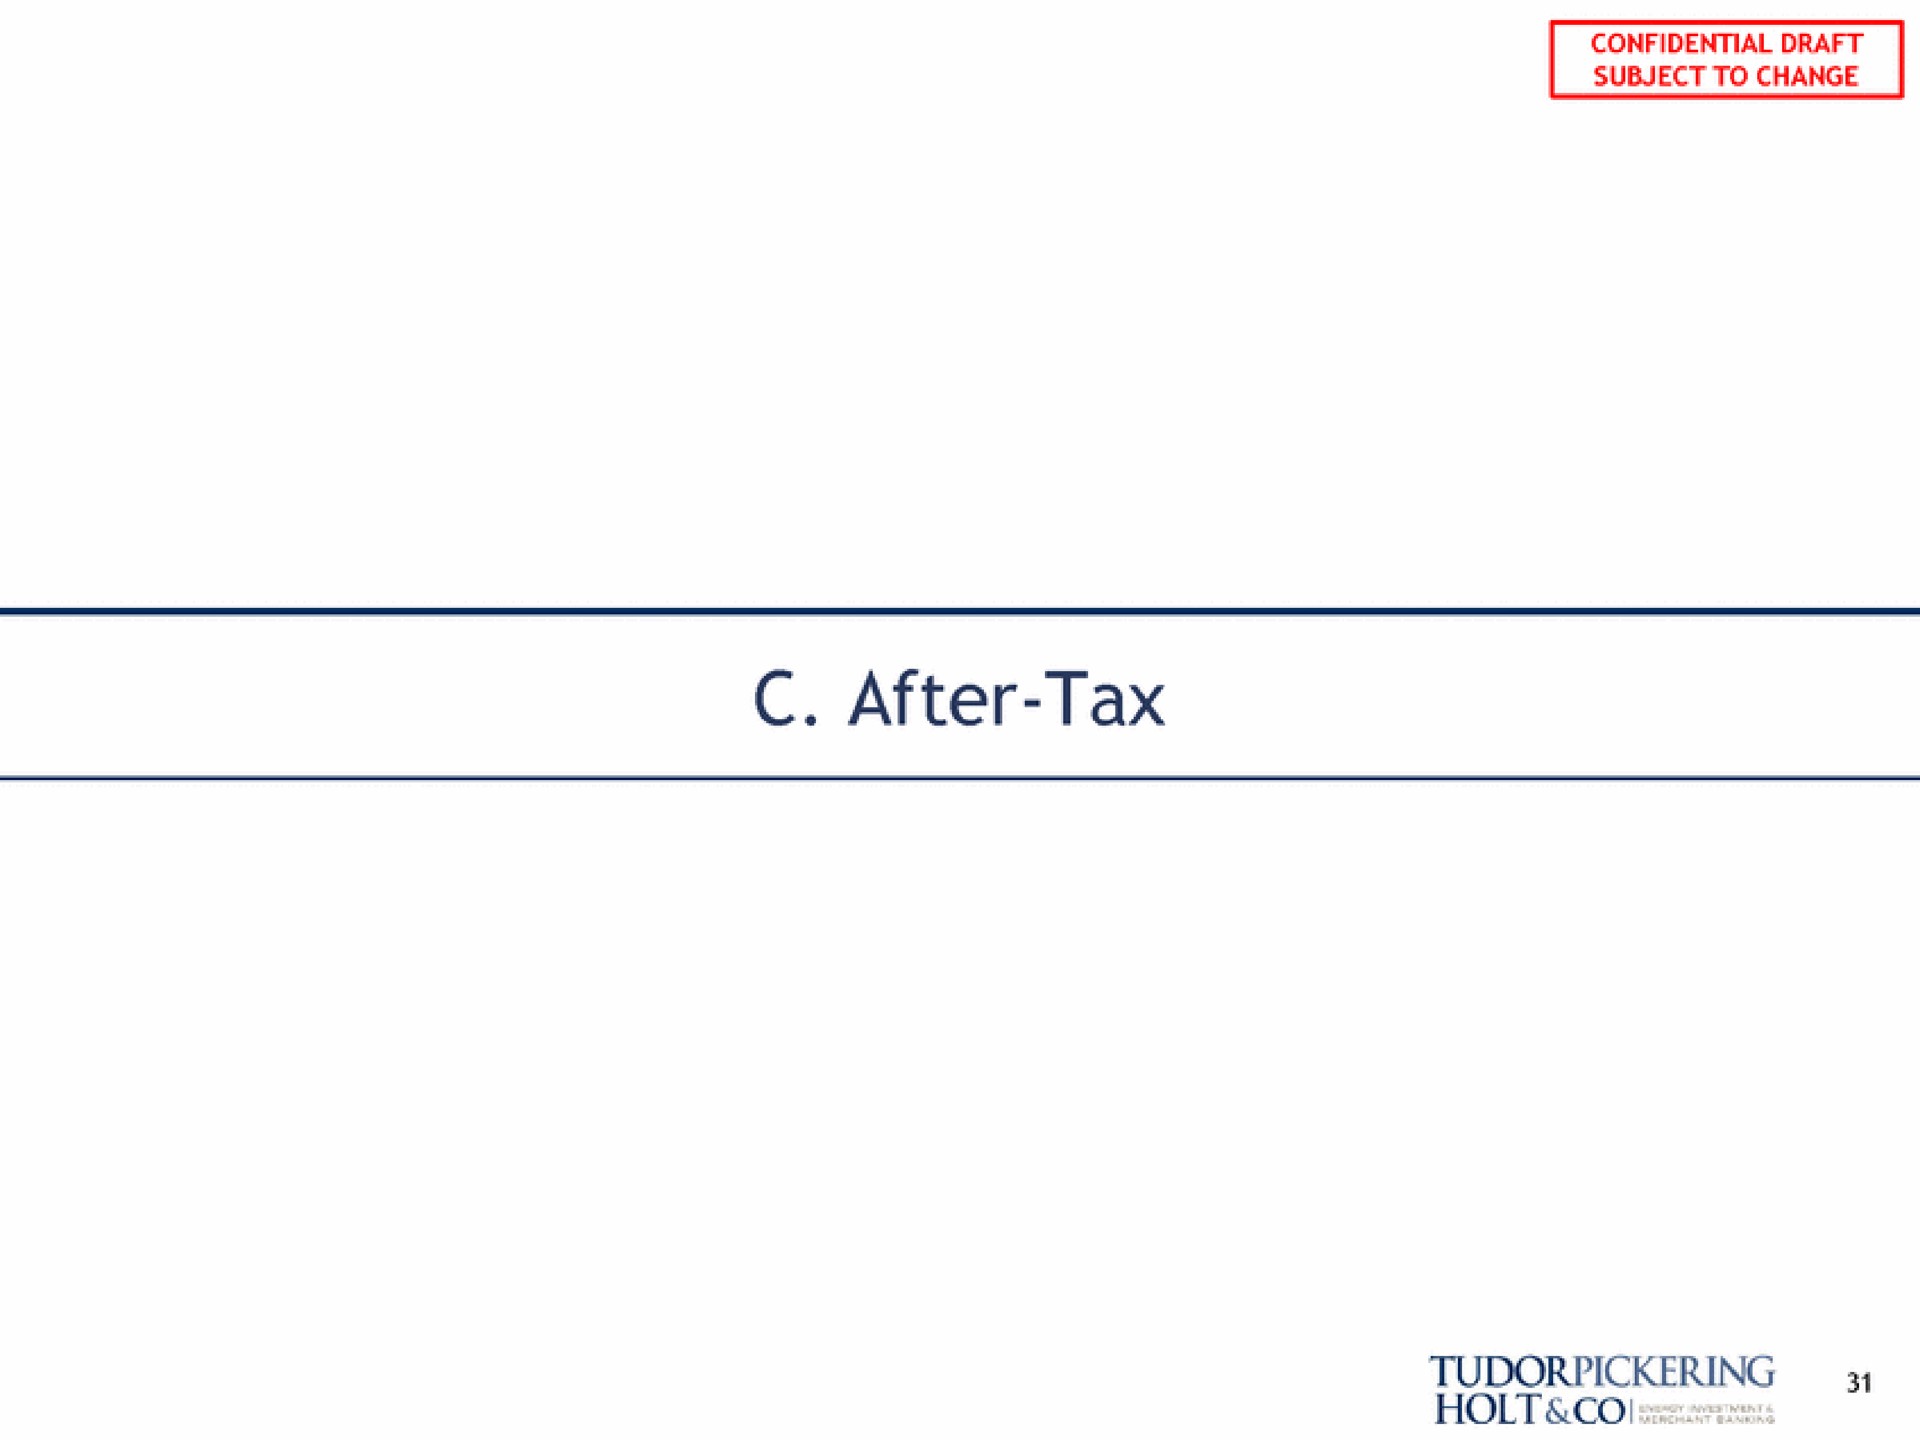 after tax holt | Tudor, Pickering, Holt & Co